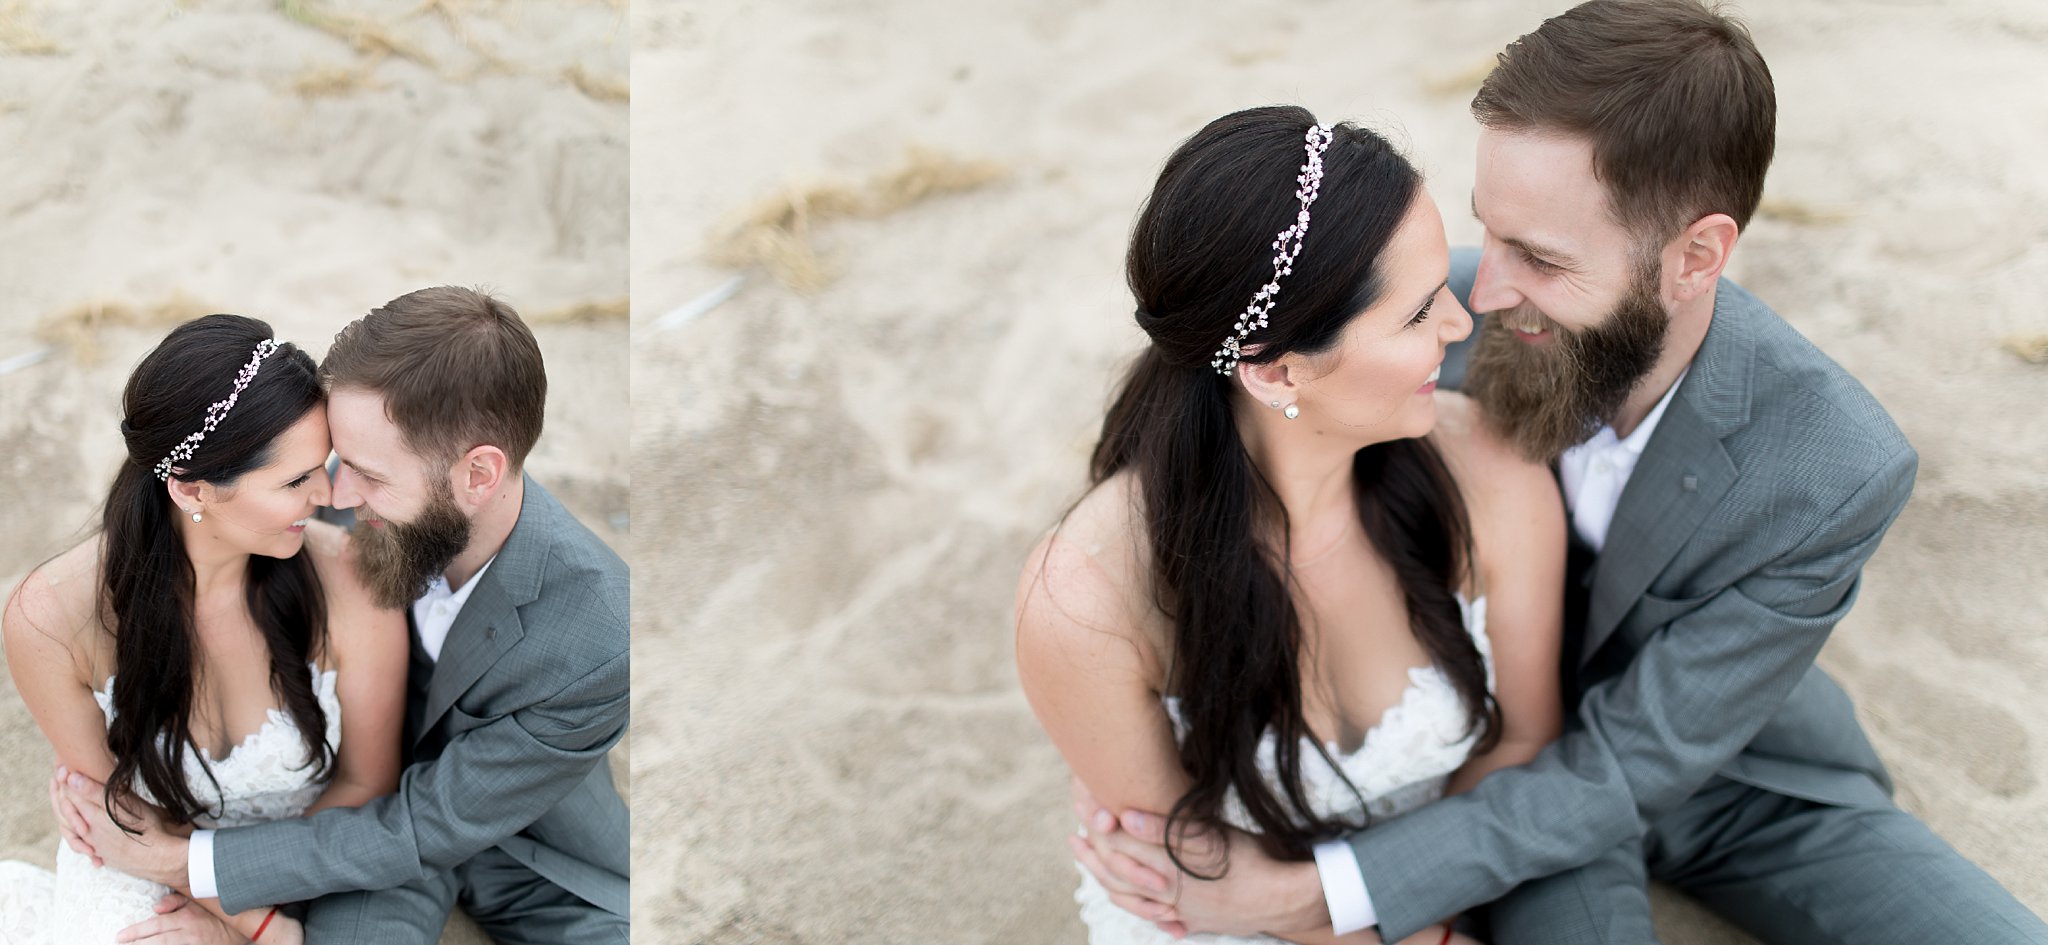 Jonathan + Keli | New Buffalo, MI Private Beach Elopement | Wedding | Toni Jay Photography